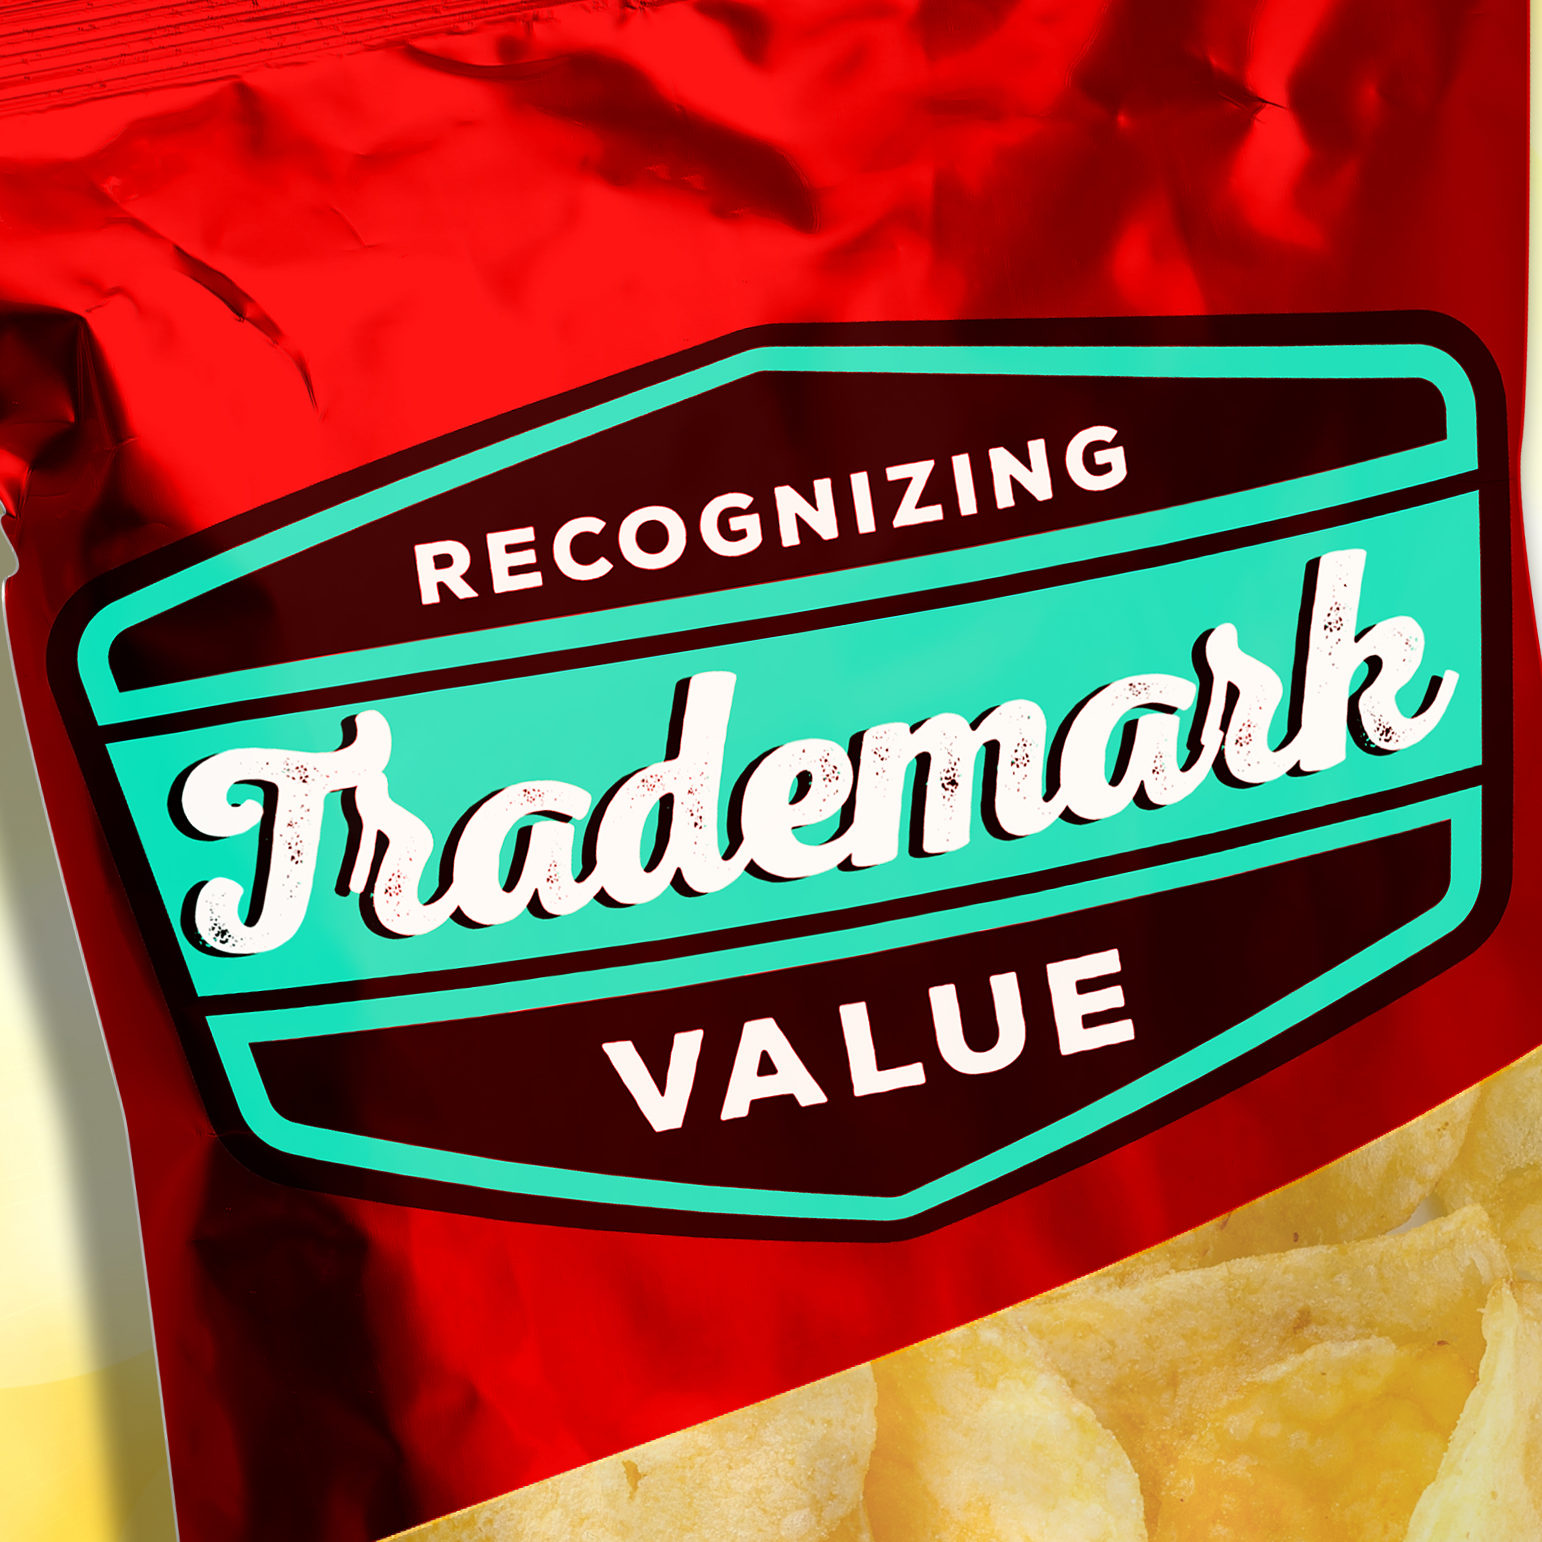 Recognizing Trademark Value